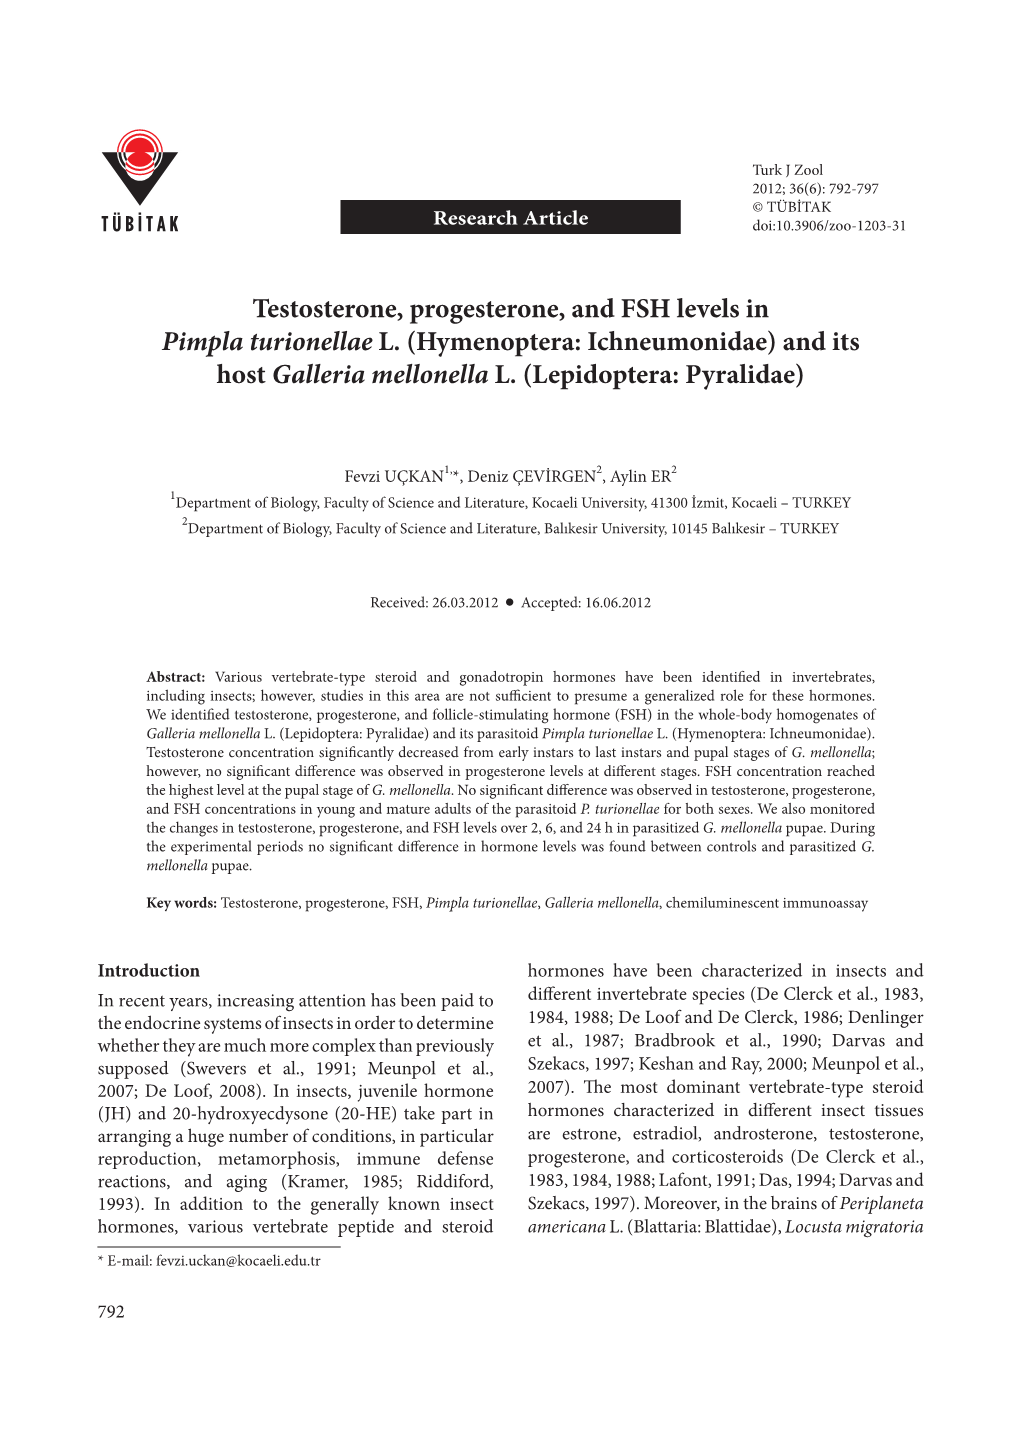 Testosterone, Progesterone, and FSH Levels in Pimpla Turionellae L